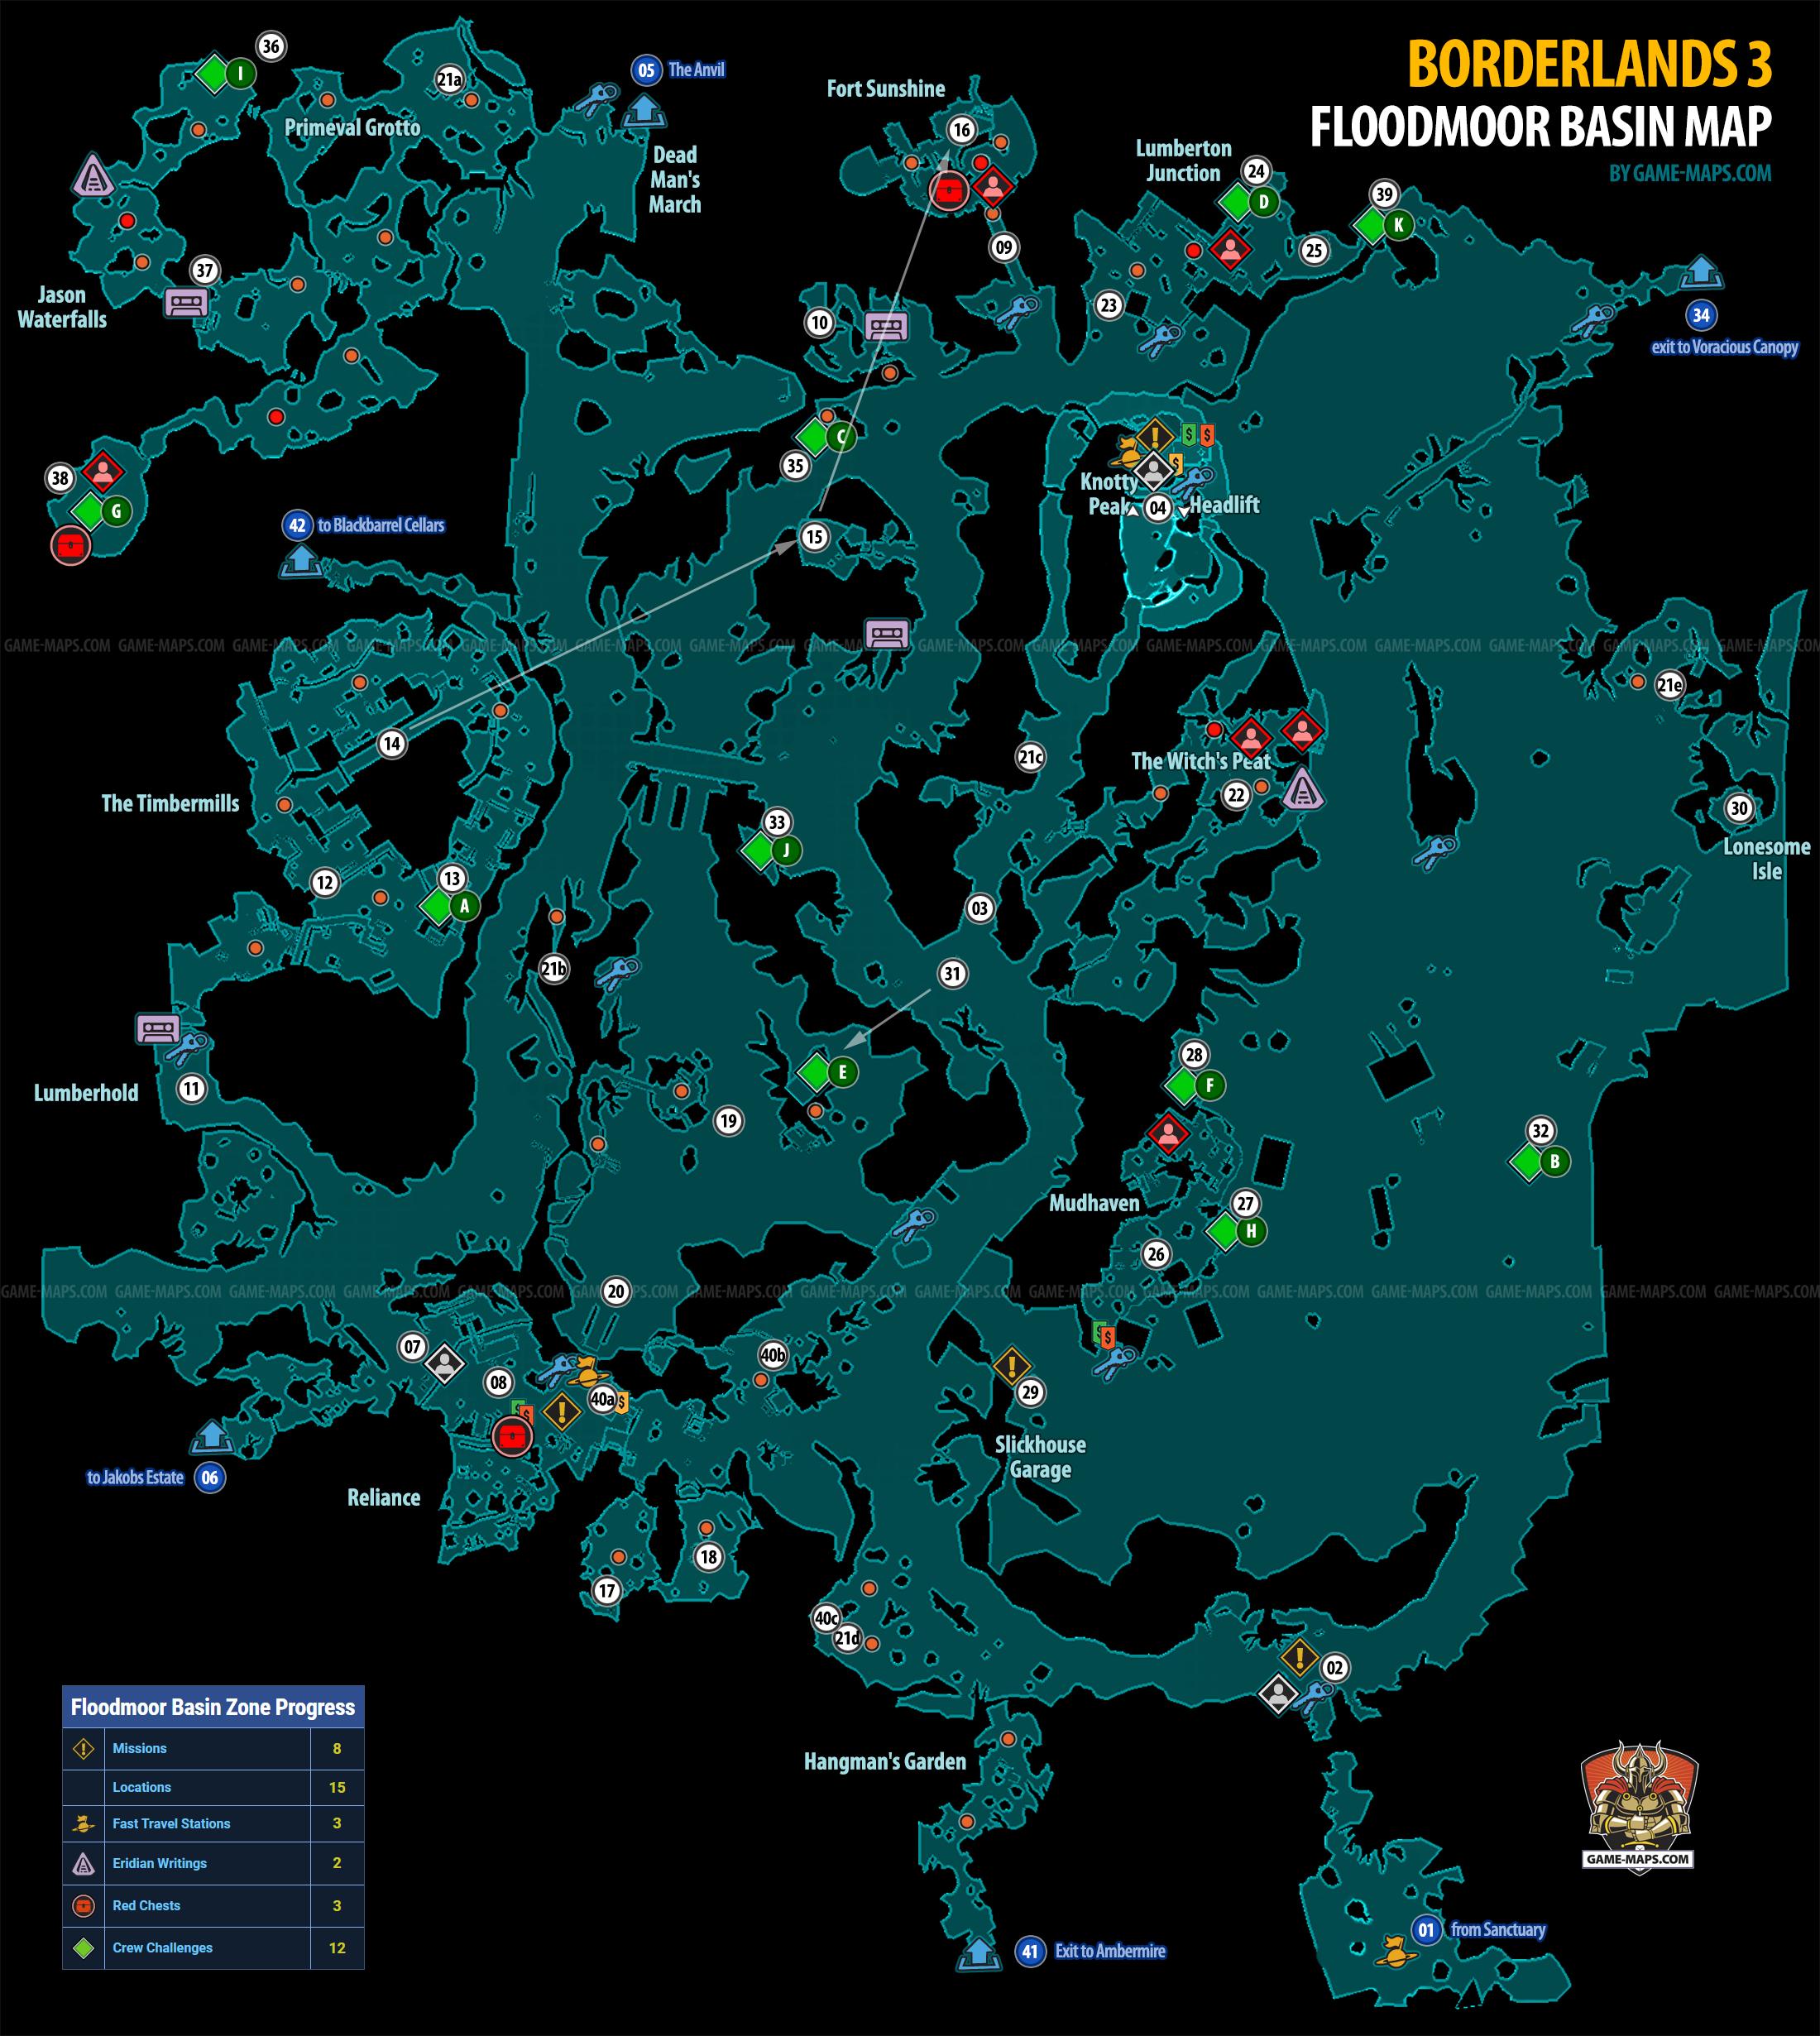 Floodmoor Basin Map on Eden-6 Planet for Borderlands 3